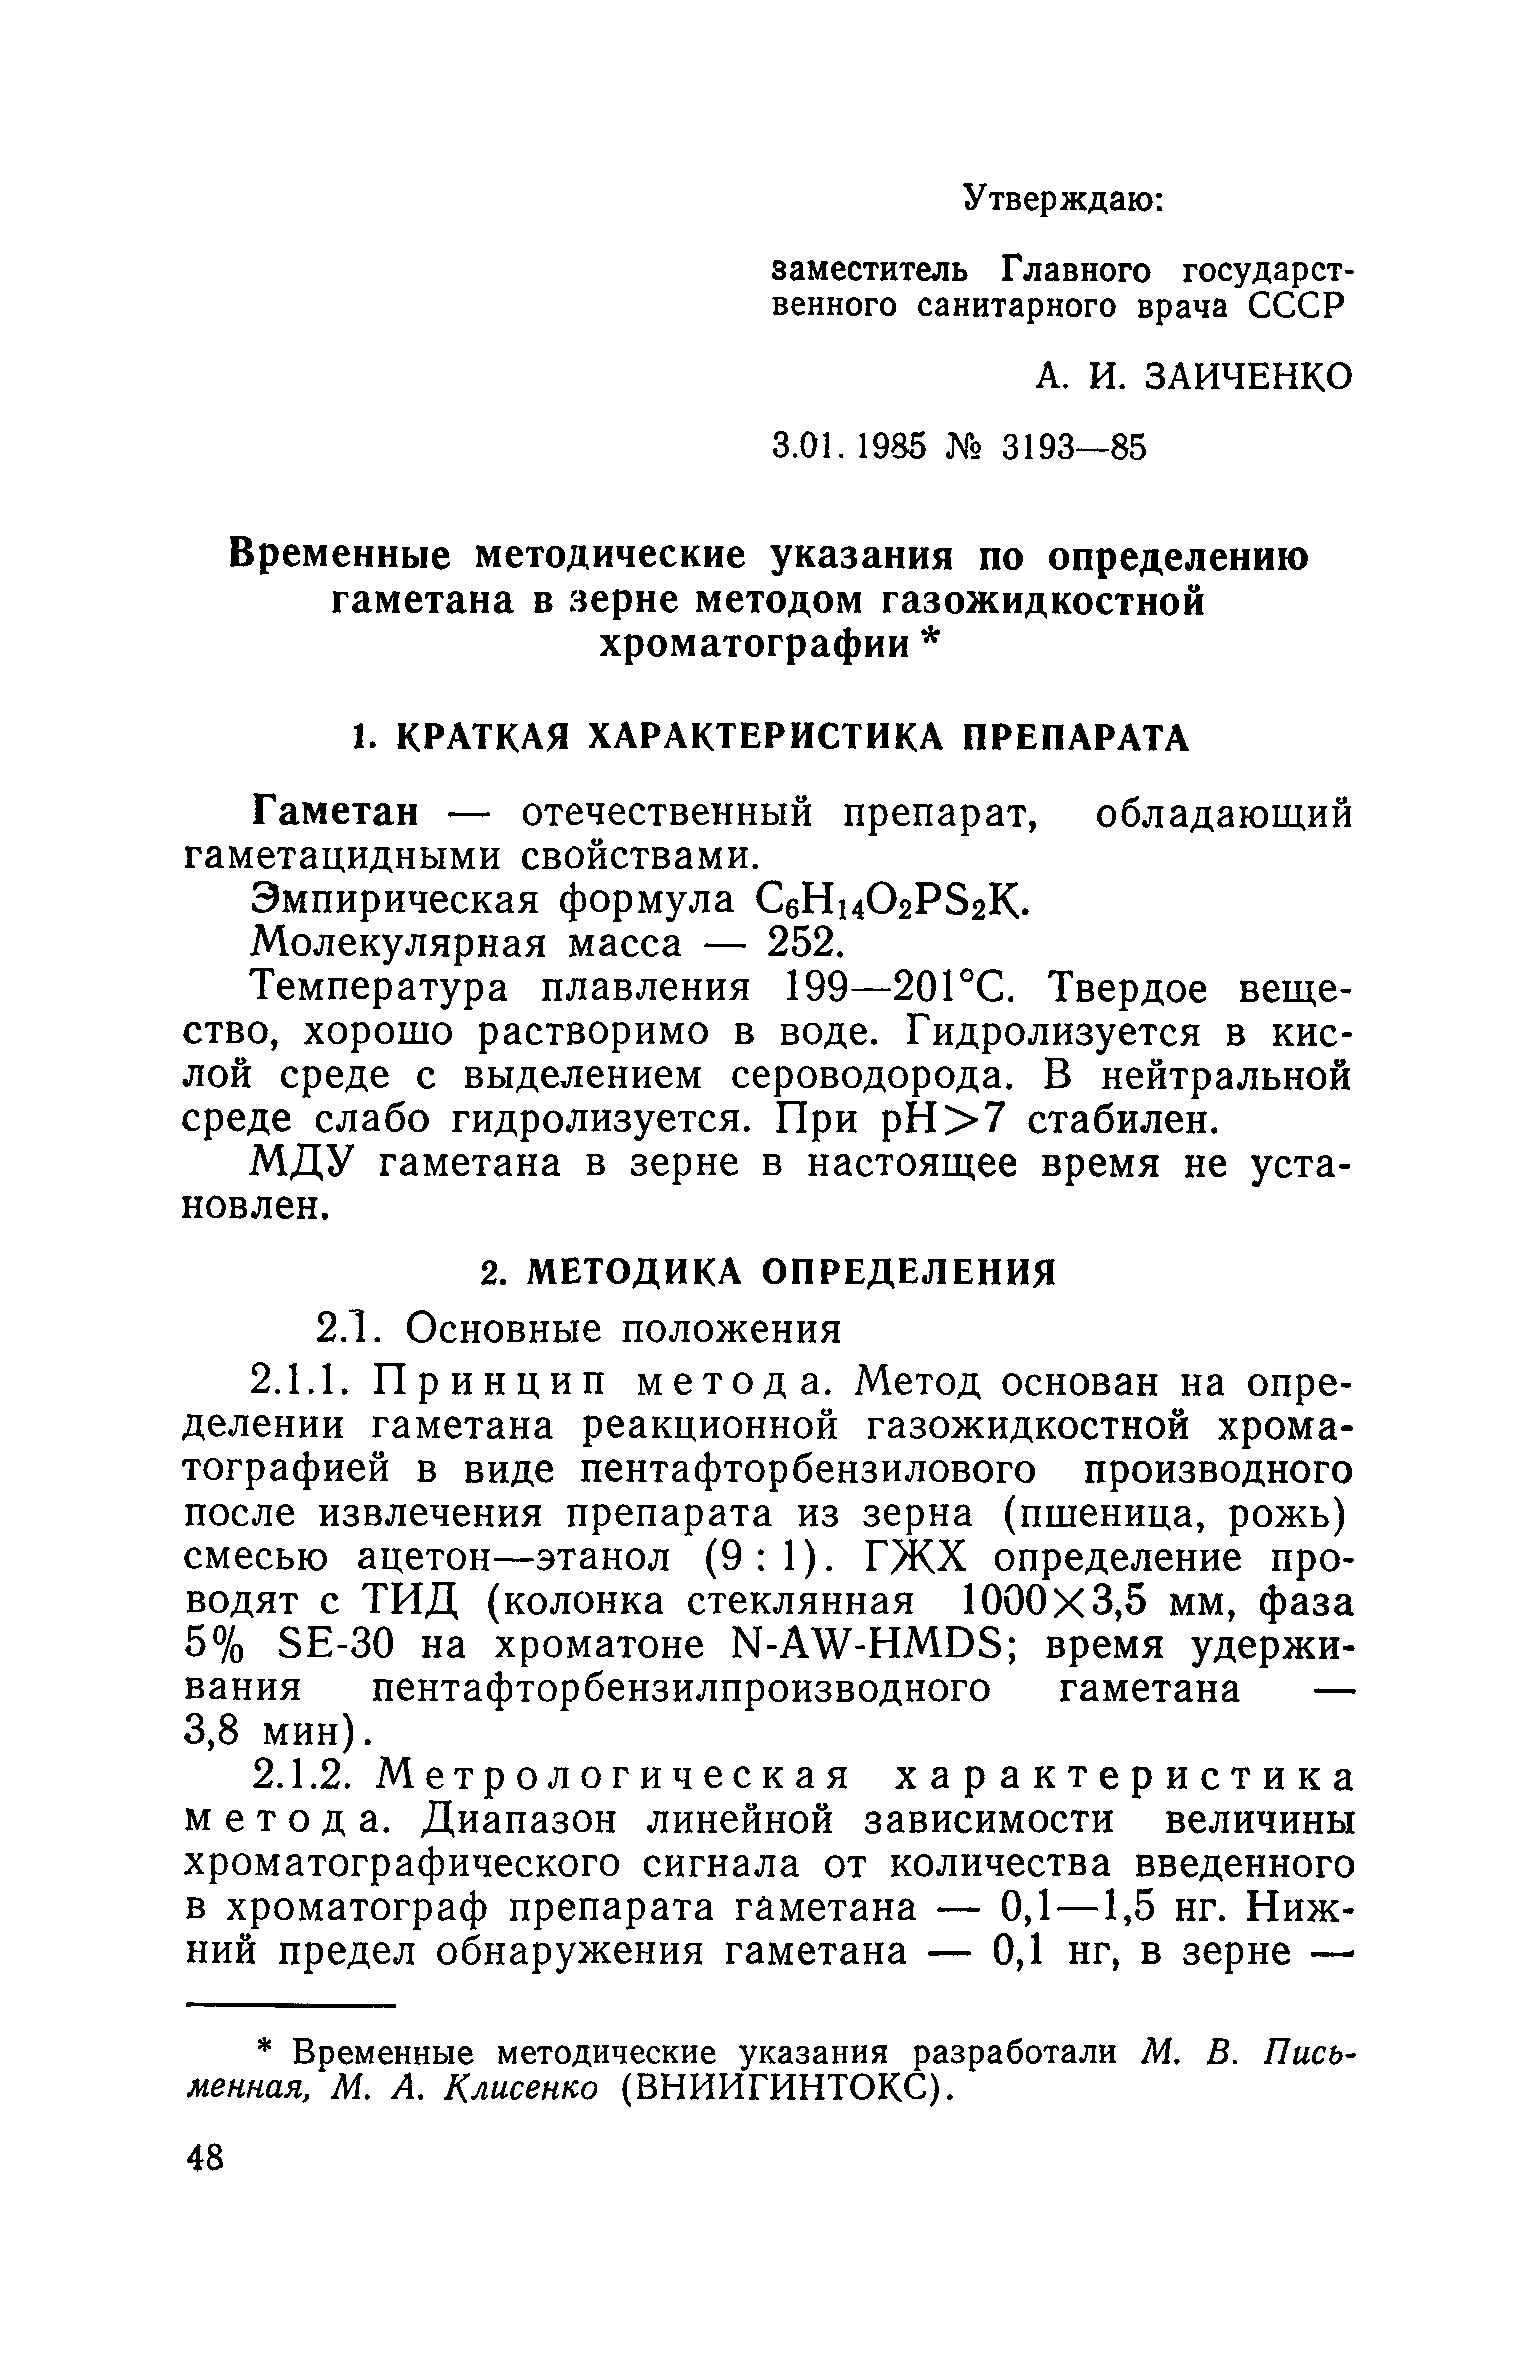 ВМУ 3193-85